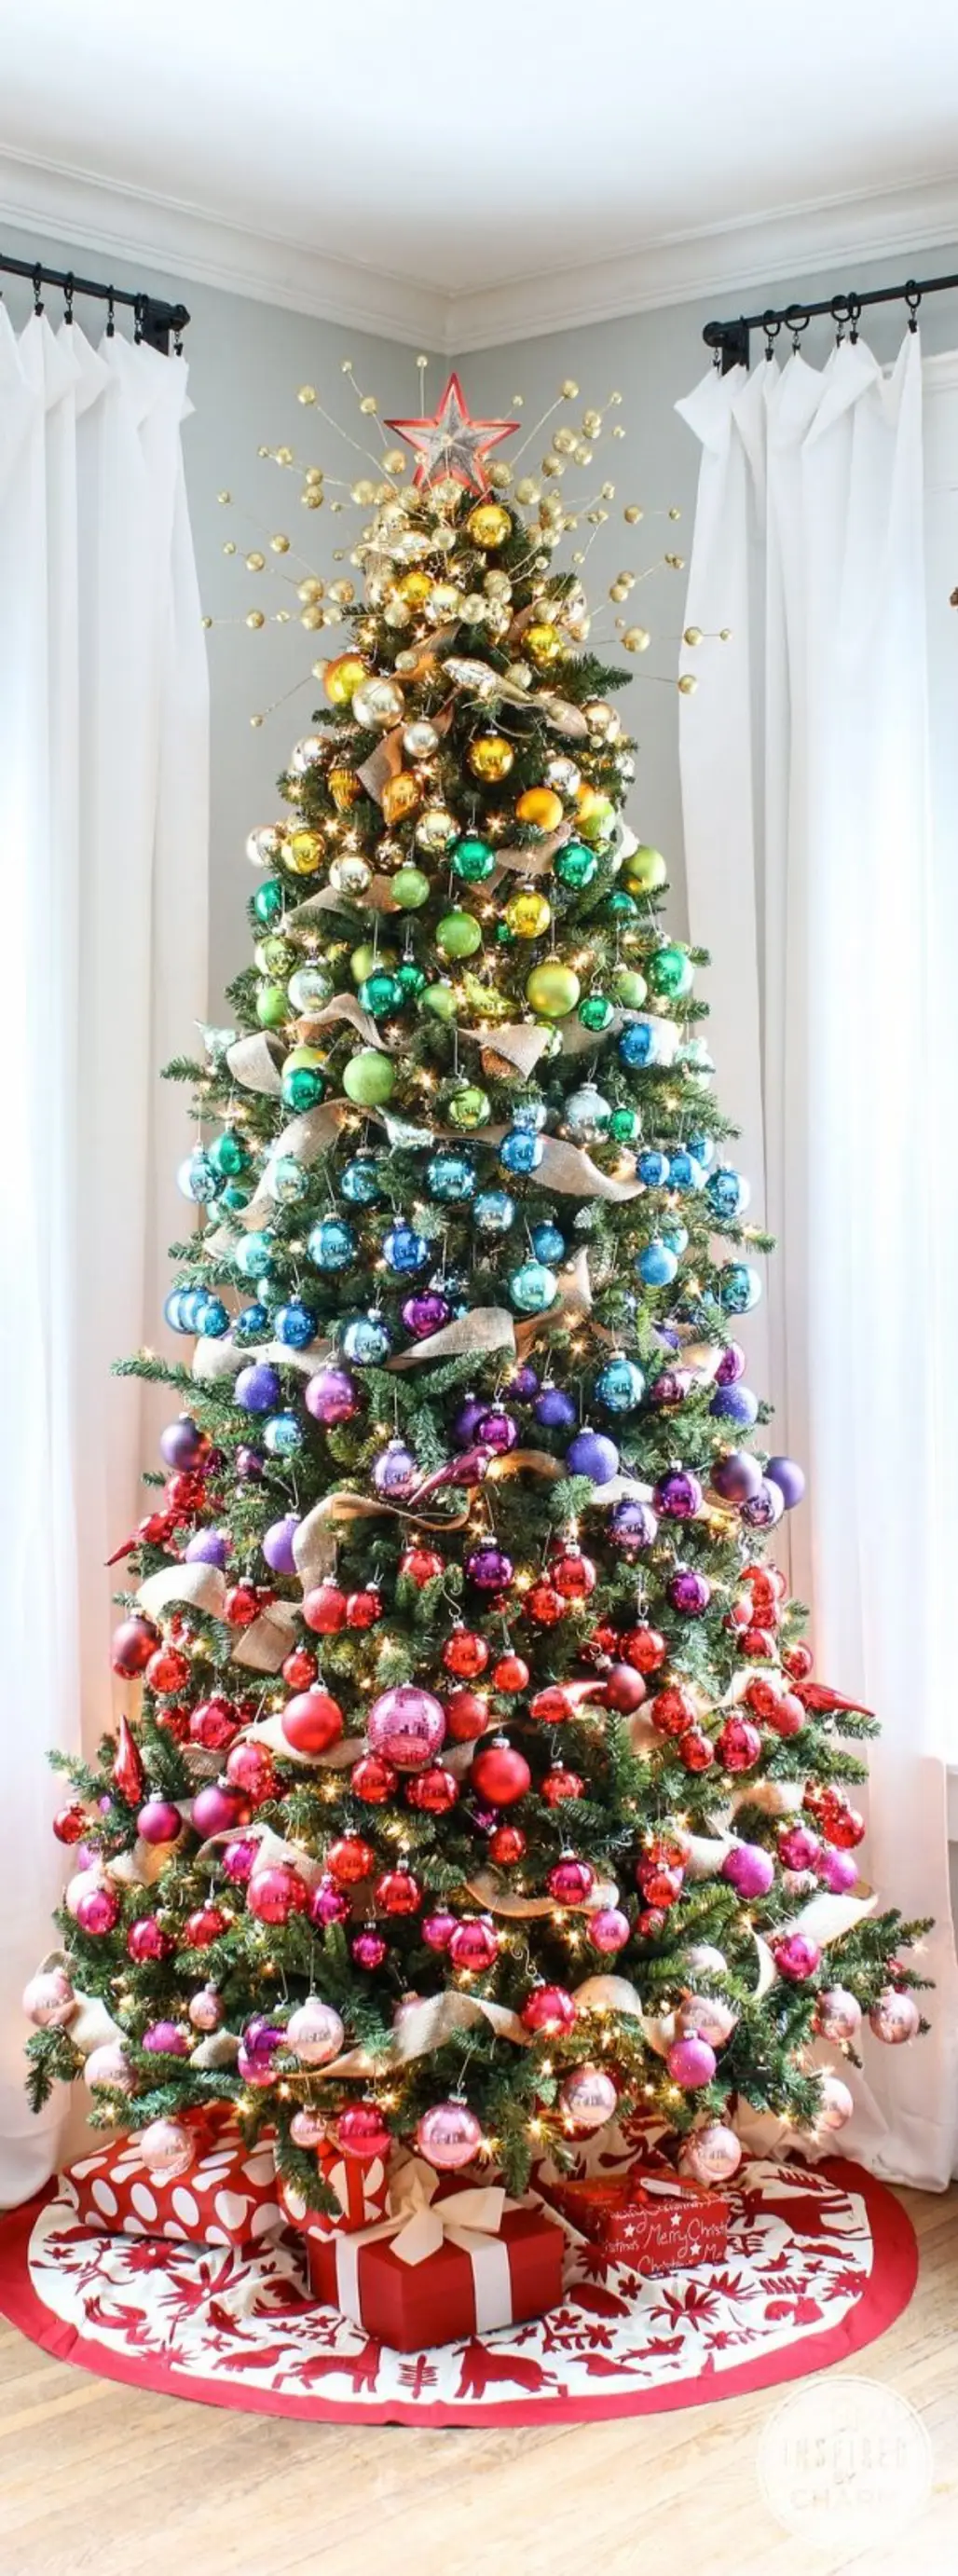 A Colorful Christmas Tree